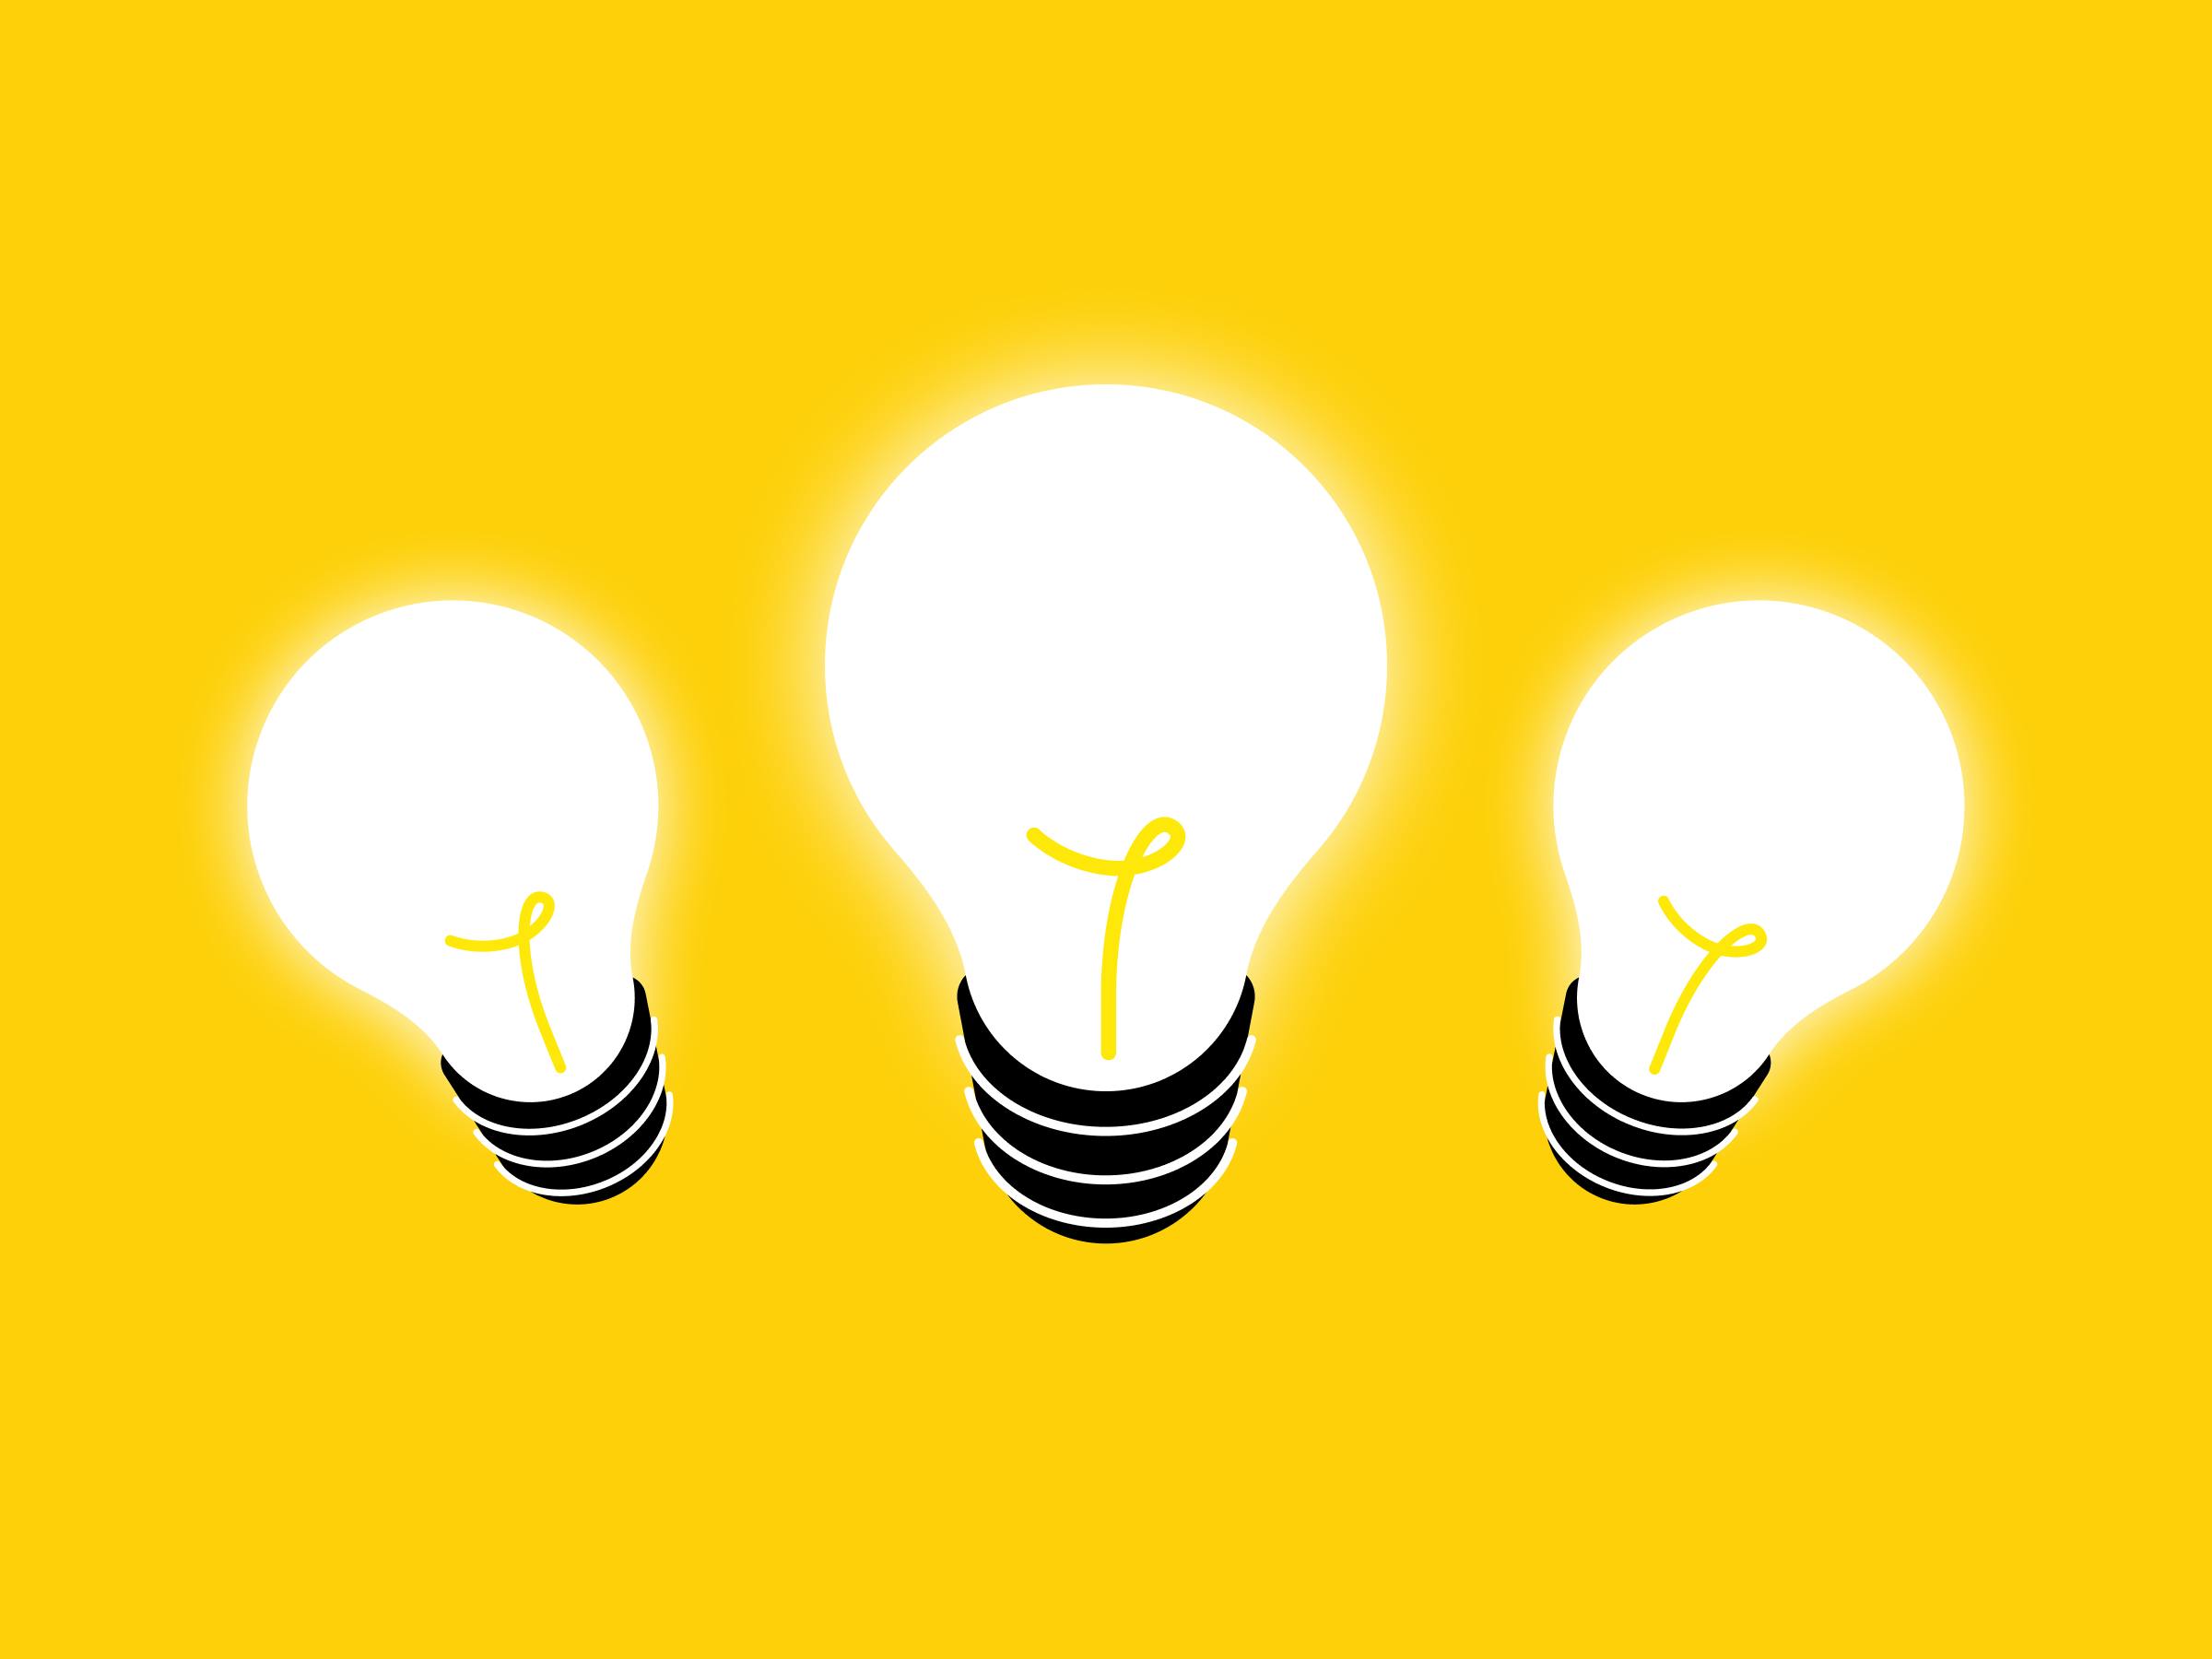 An illustration of three incandescent light bulbs